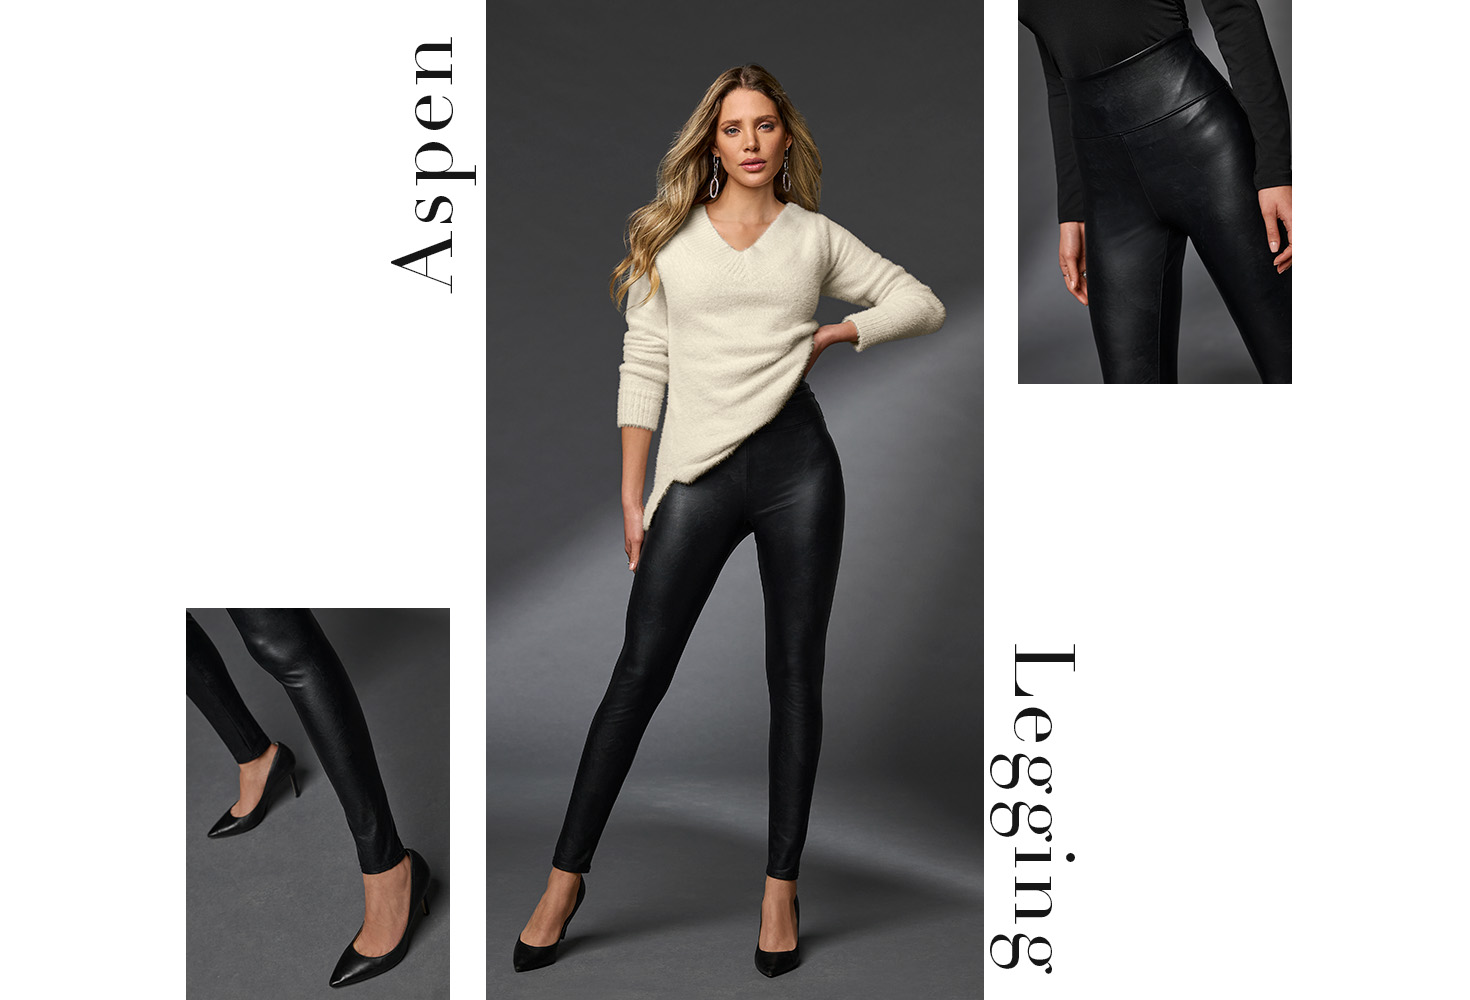 Model wearing white v neck sweater, black faux leather aspen leggings and black heels.